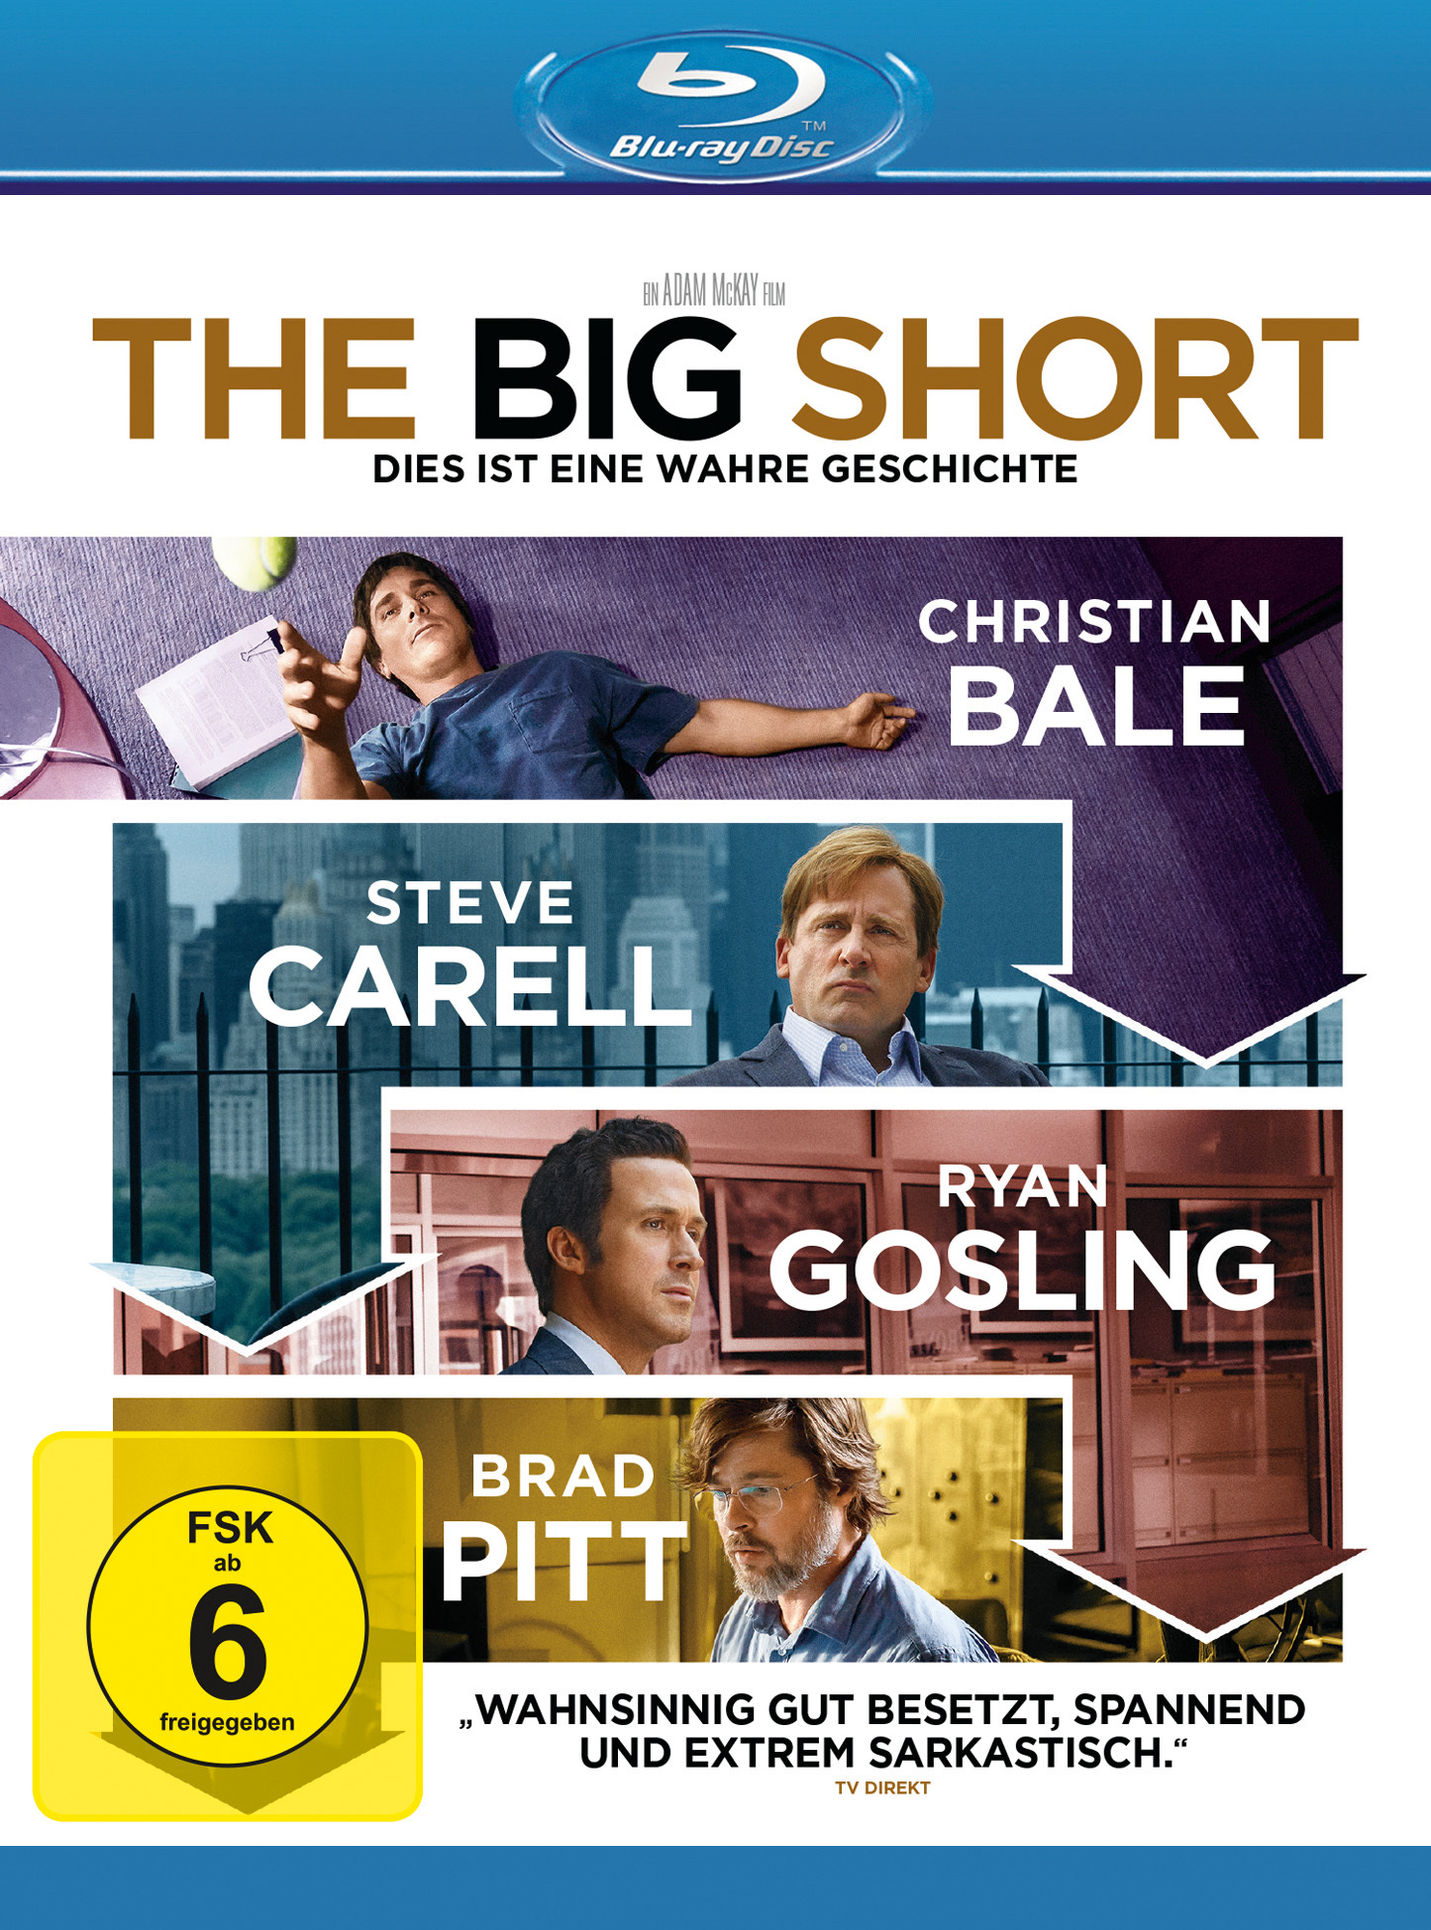 The Big Short Blu-ray jetzt im Weltbild.de Shop bestellen